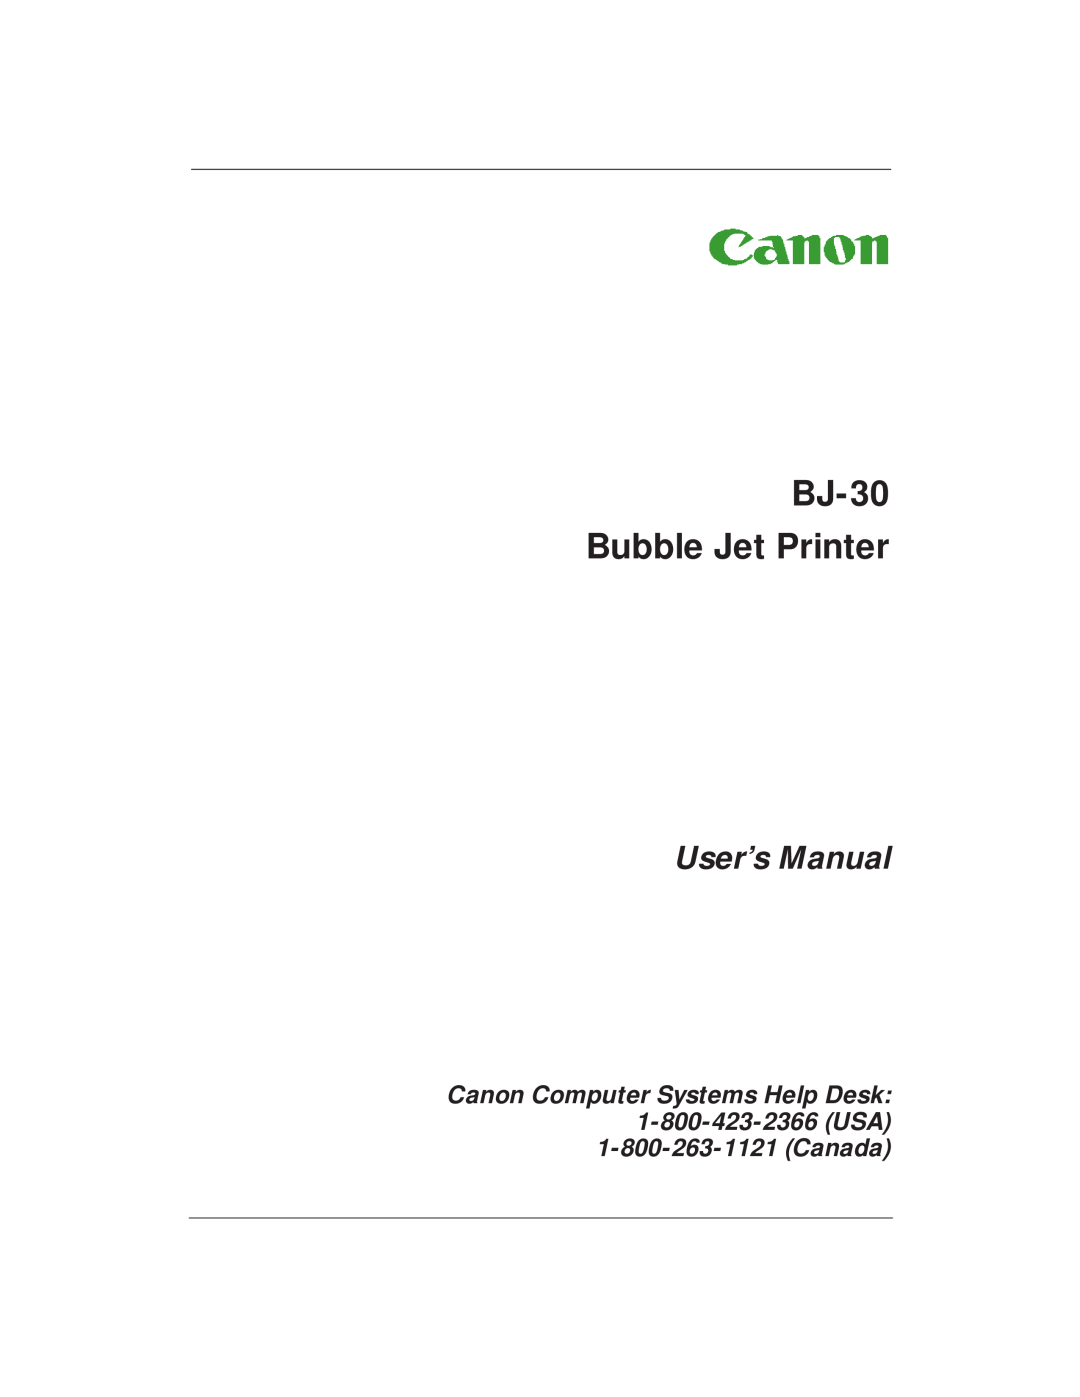 Canon manual BJ-30 Bubble Jet Printer, User’s Manual, Canon Computer Systems Help Desk 1-800-423-2366 USA 